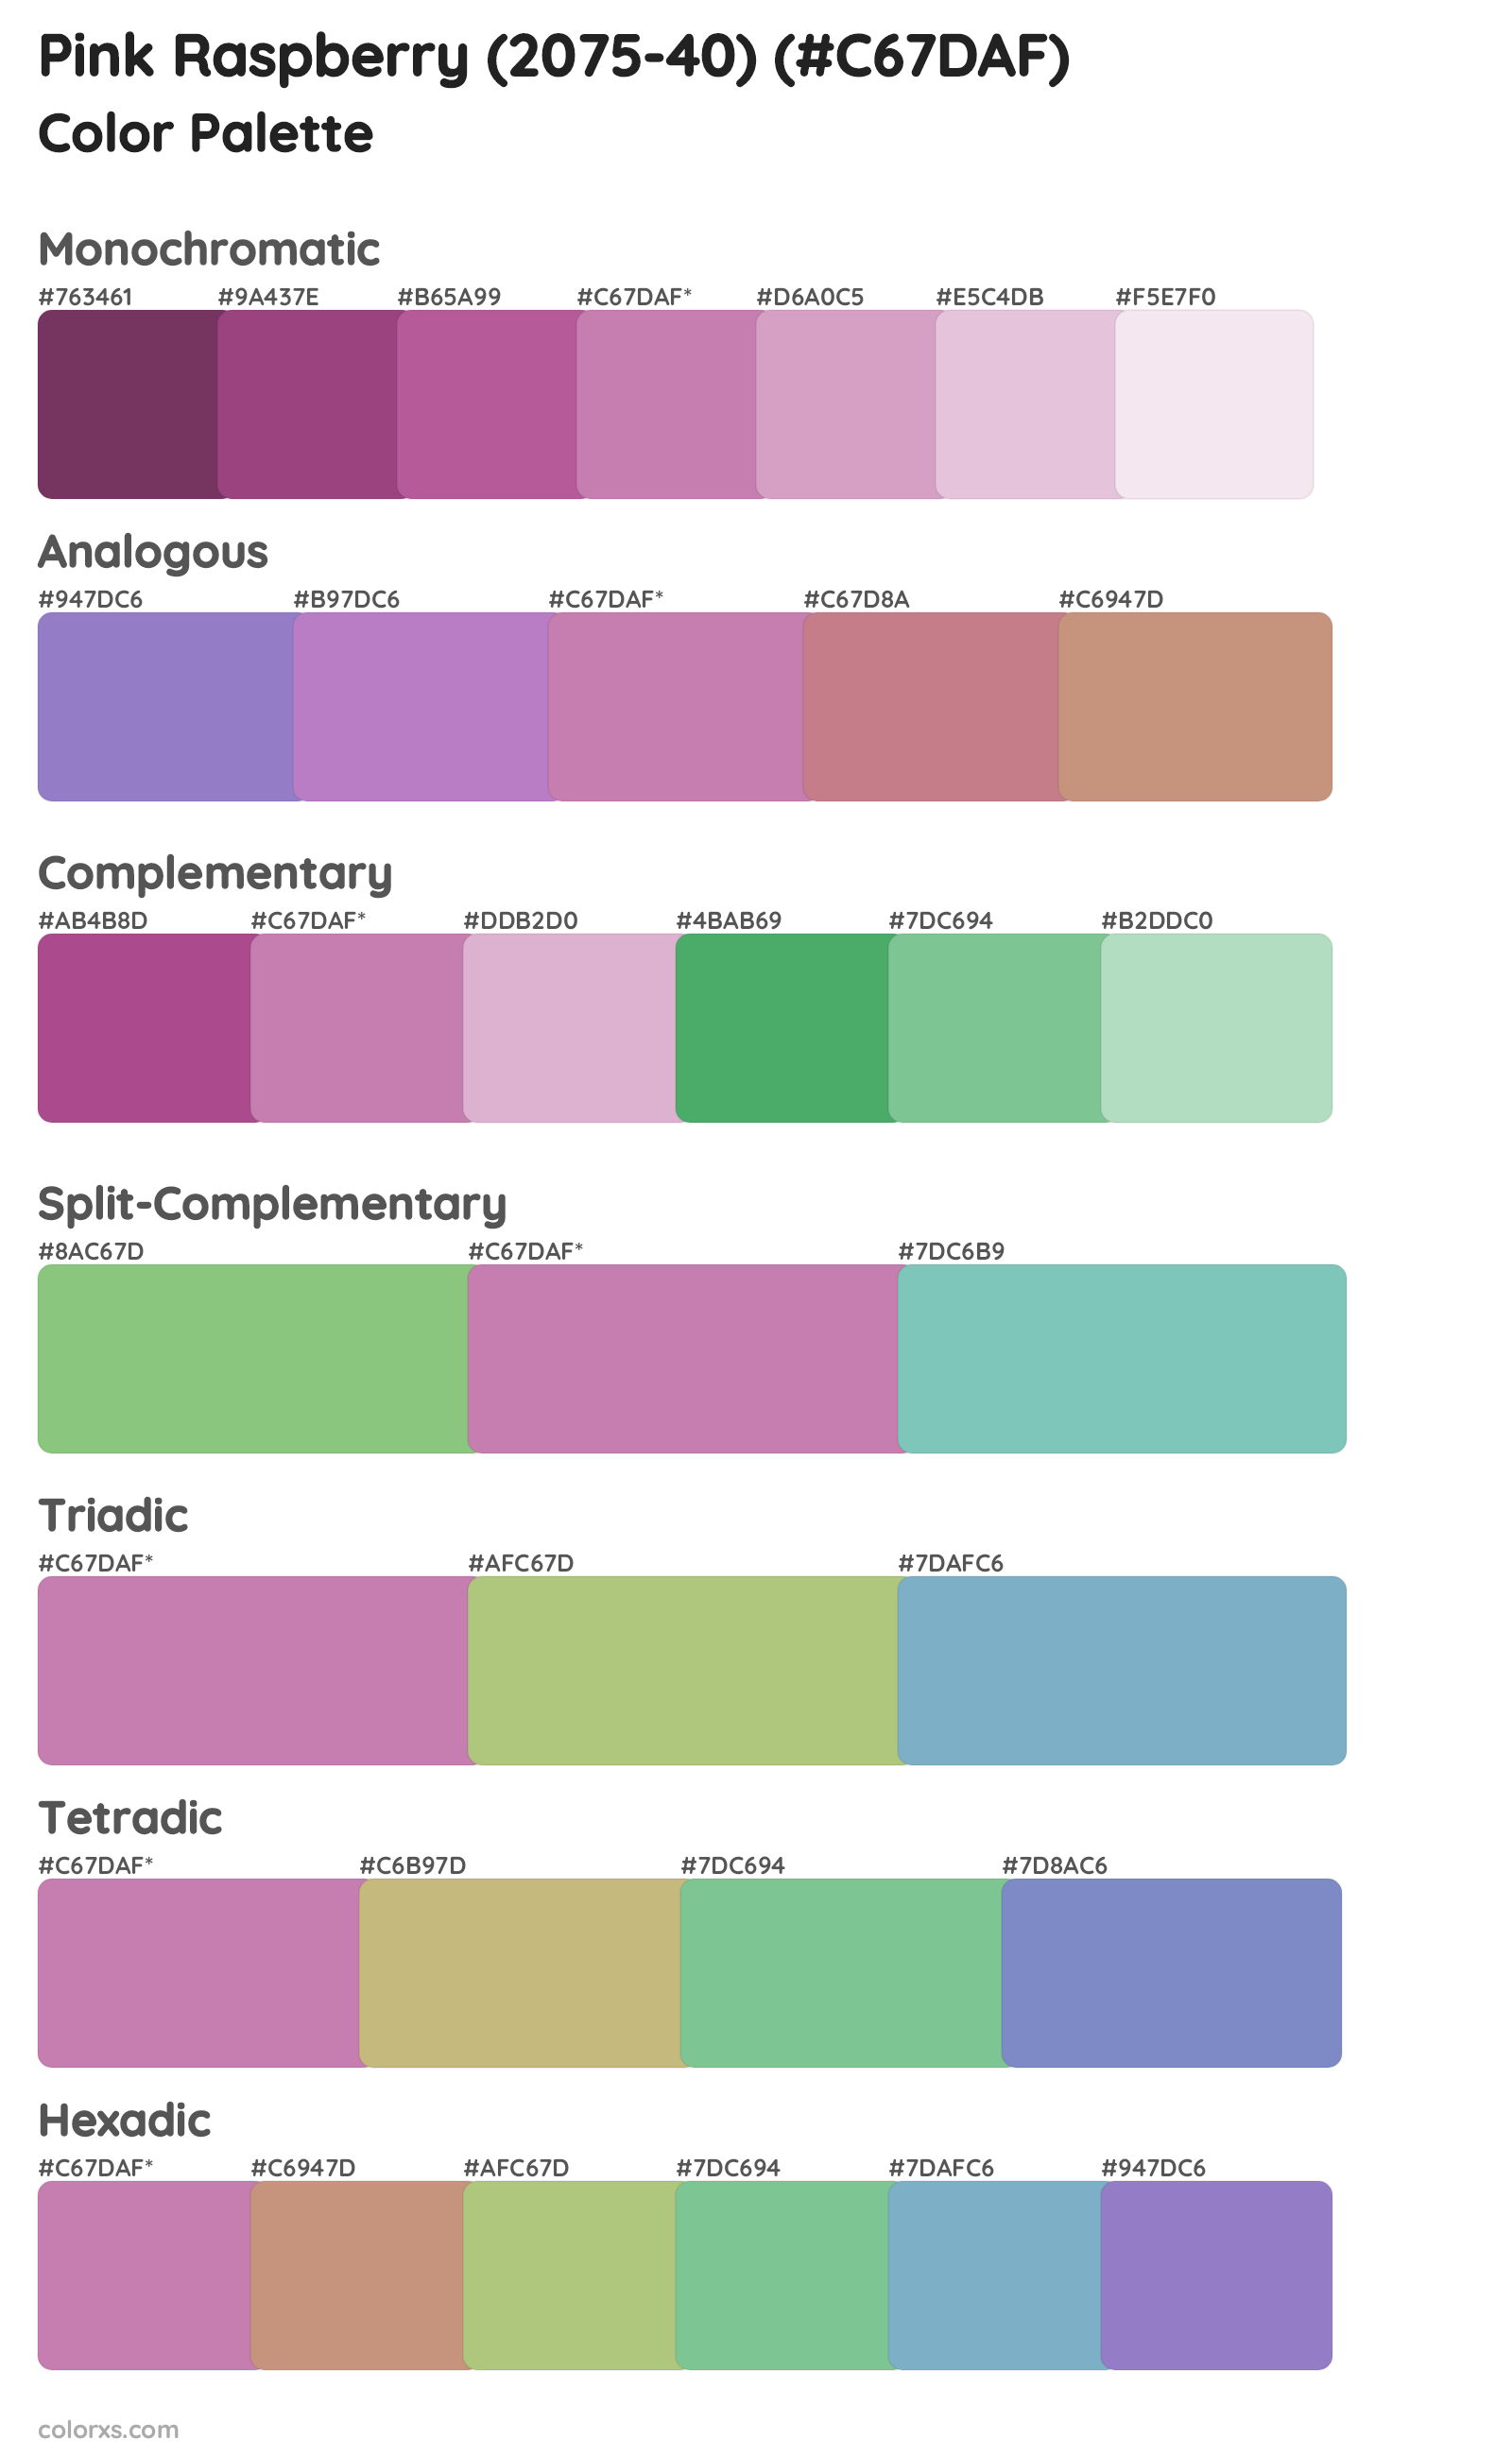 Pink Raspberry (2075-40) Color Scheme Palettes